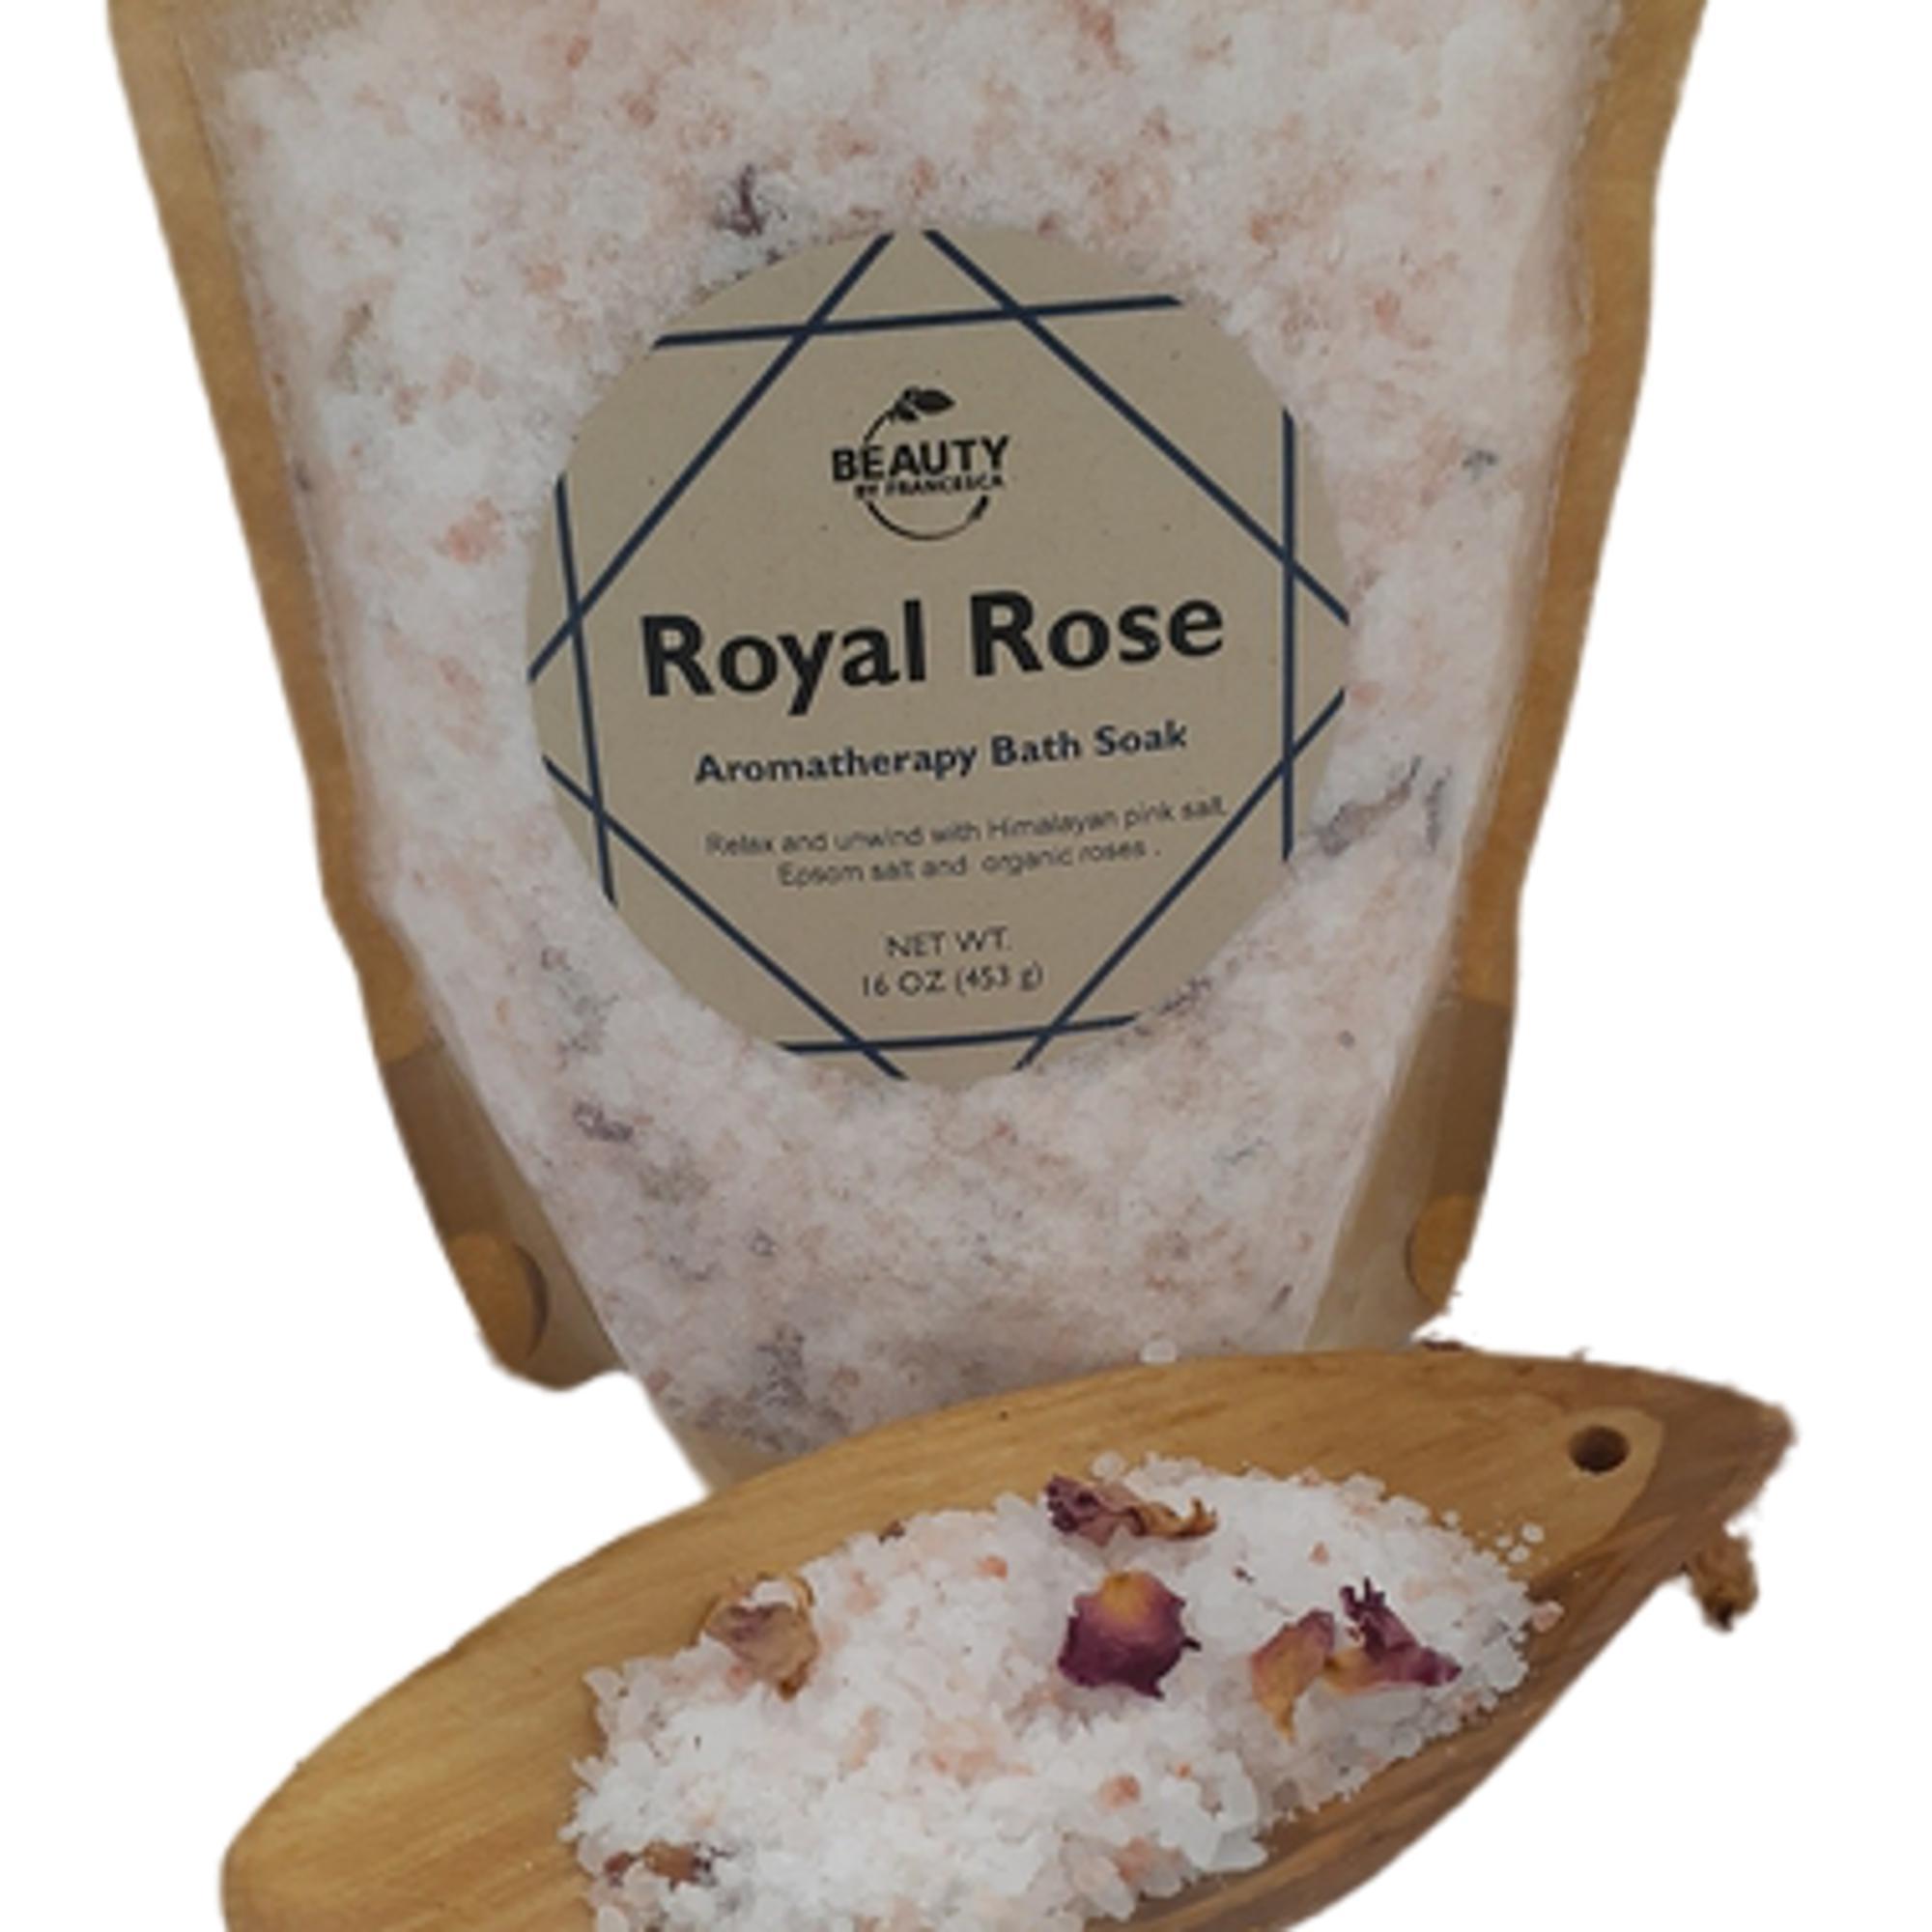 royal rose bath salt displayed